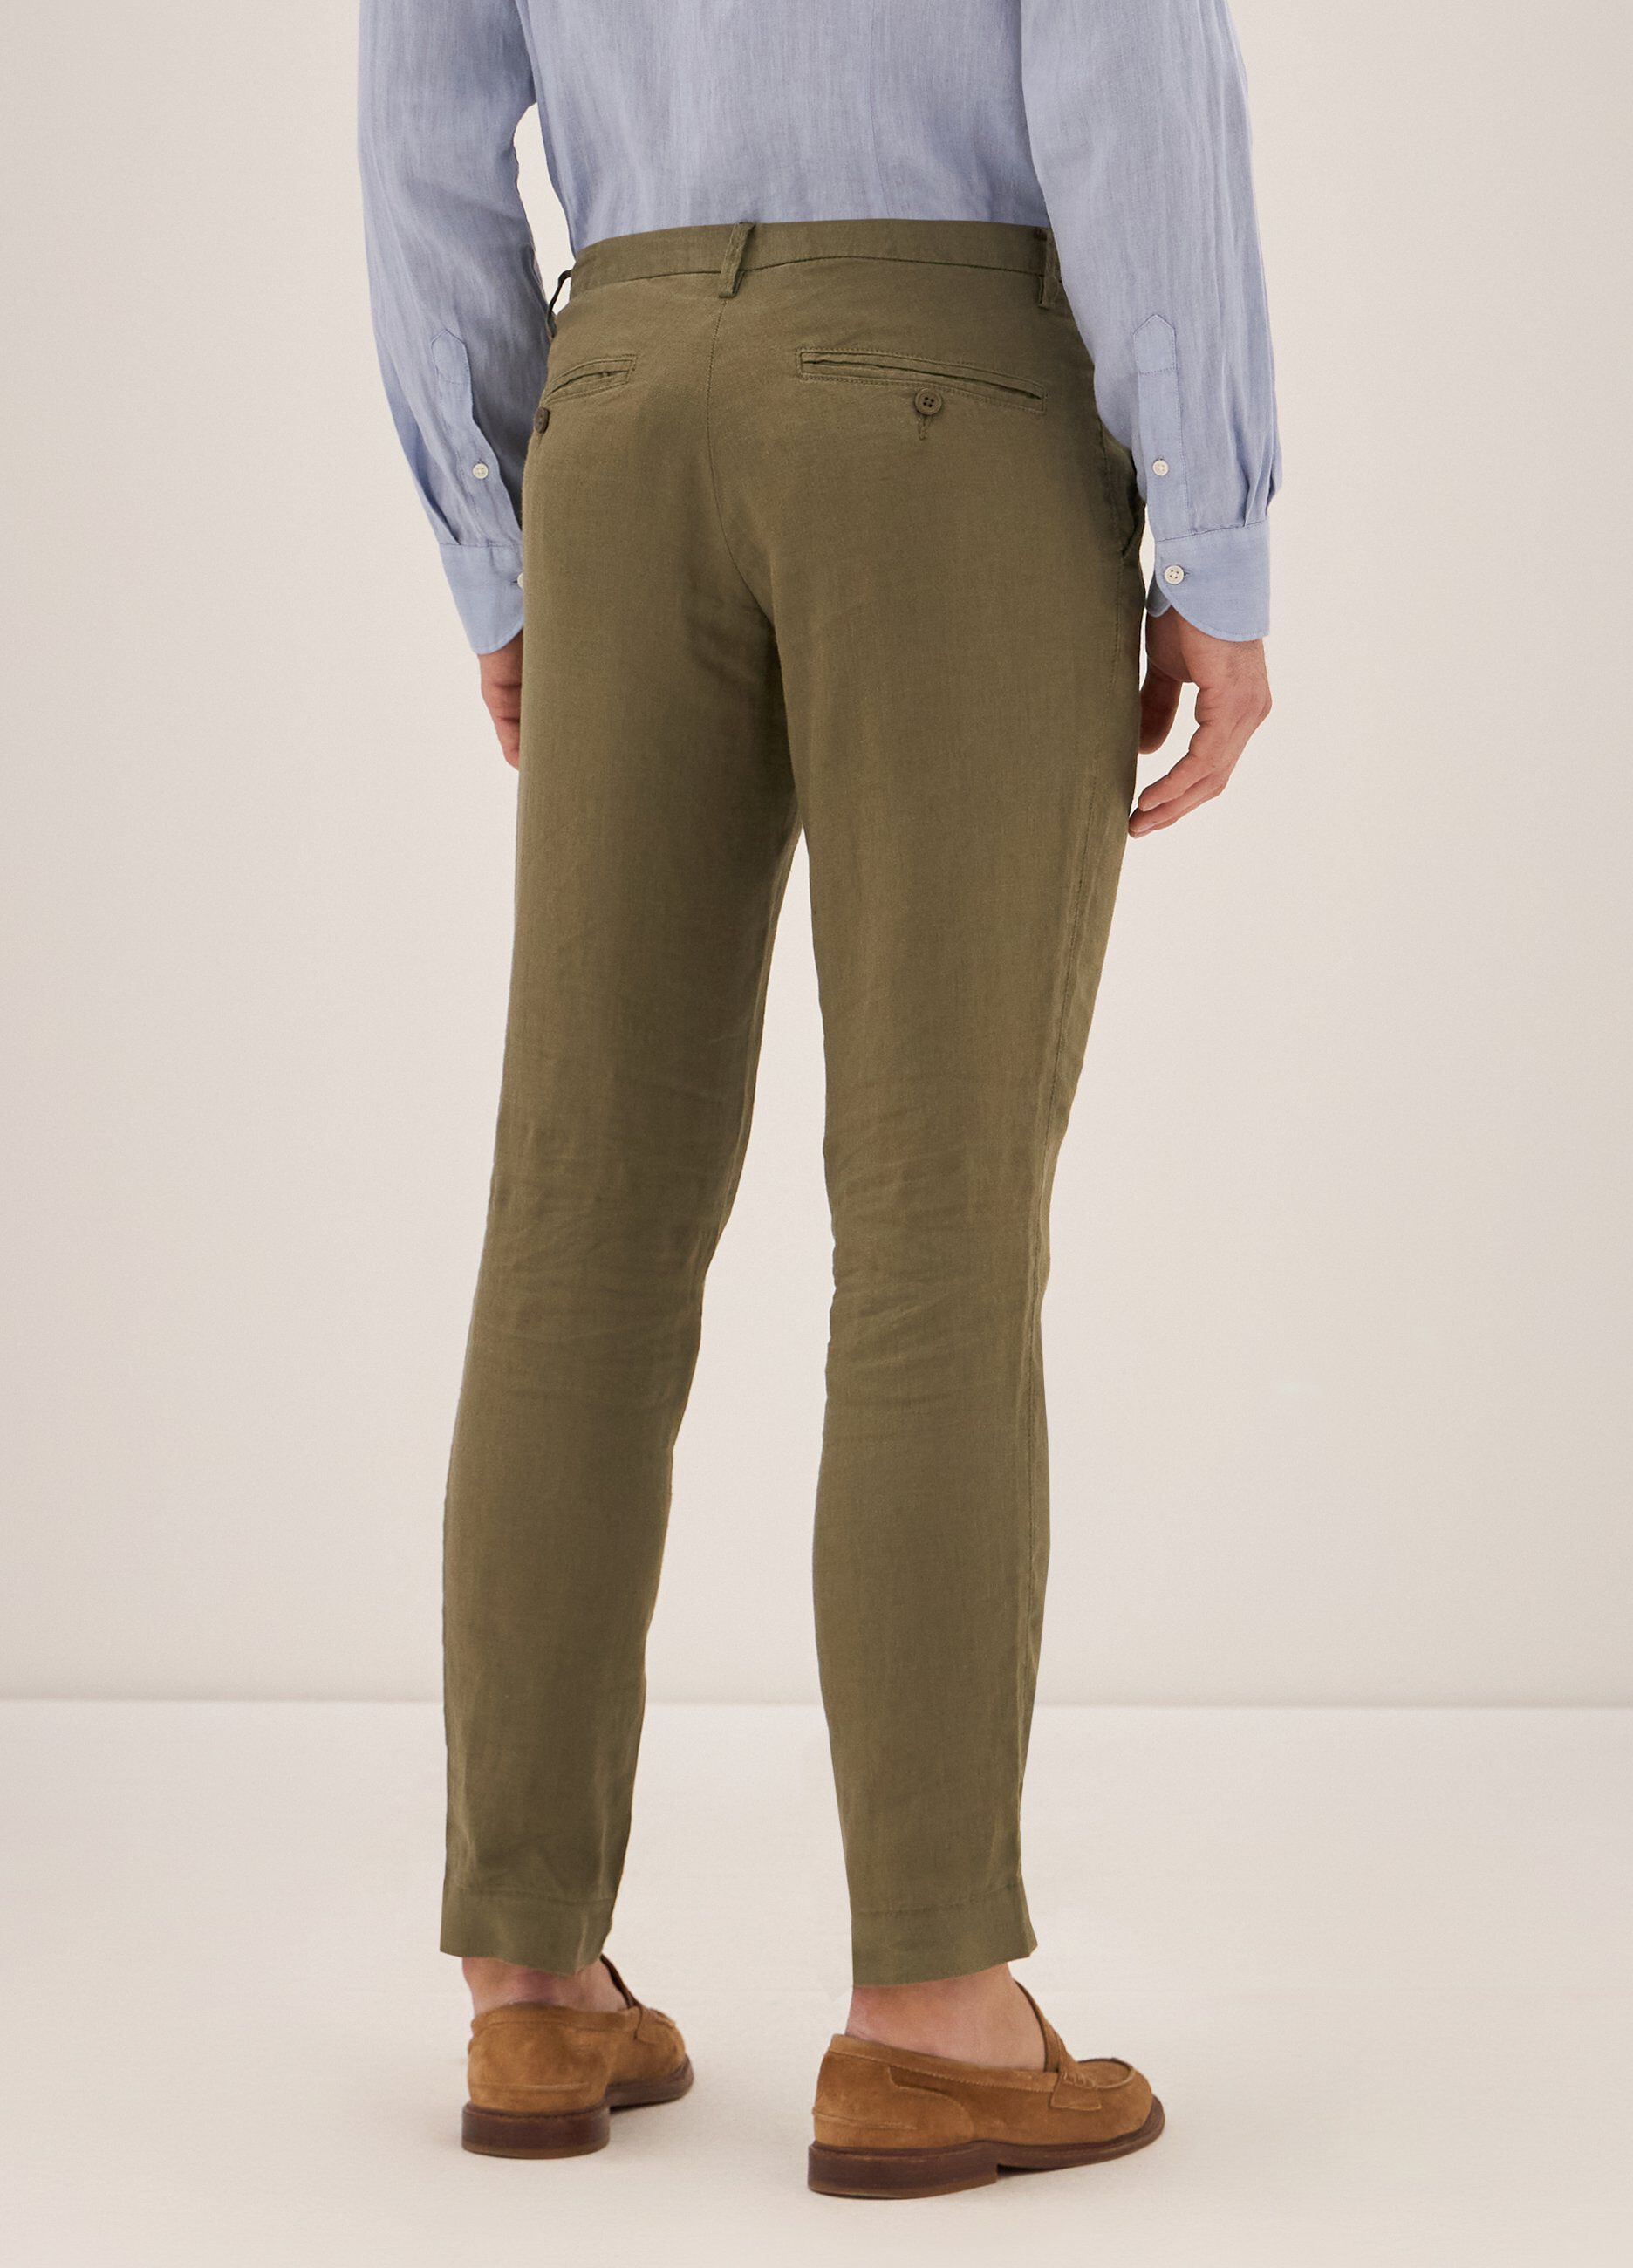 Pantaloni Rumford in puro lino uomo_1